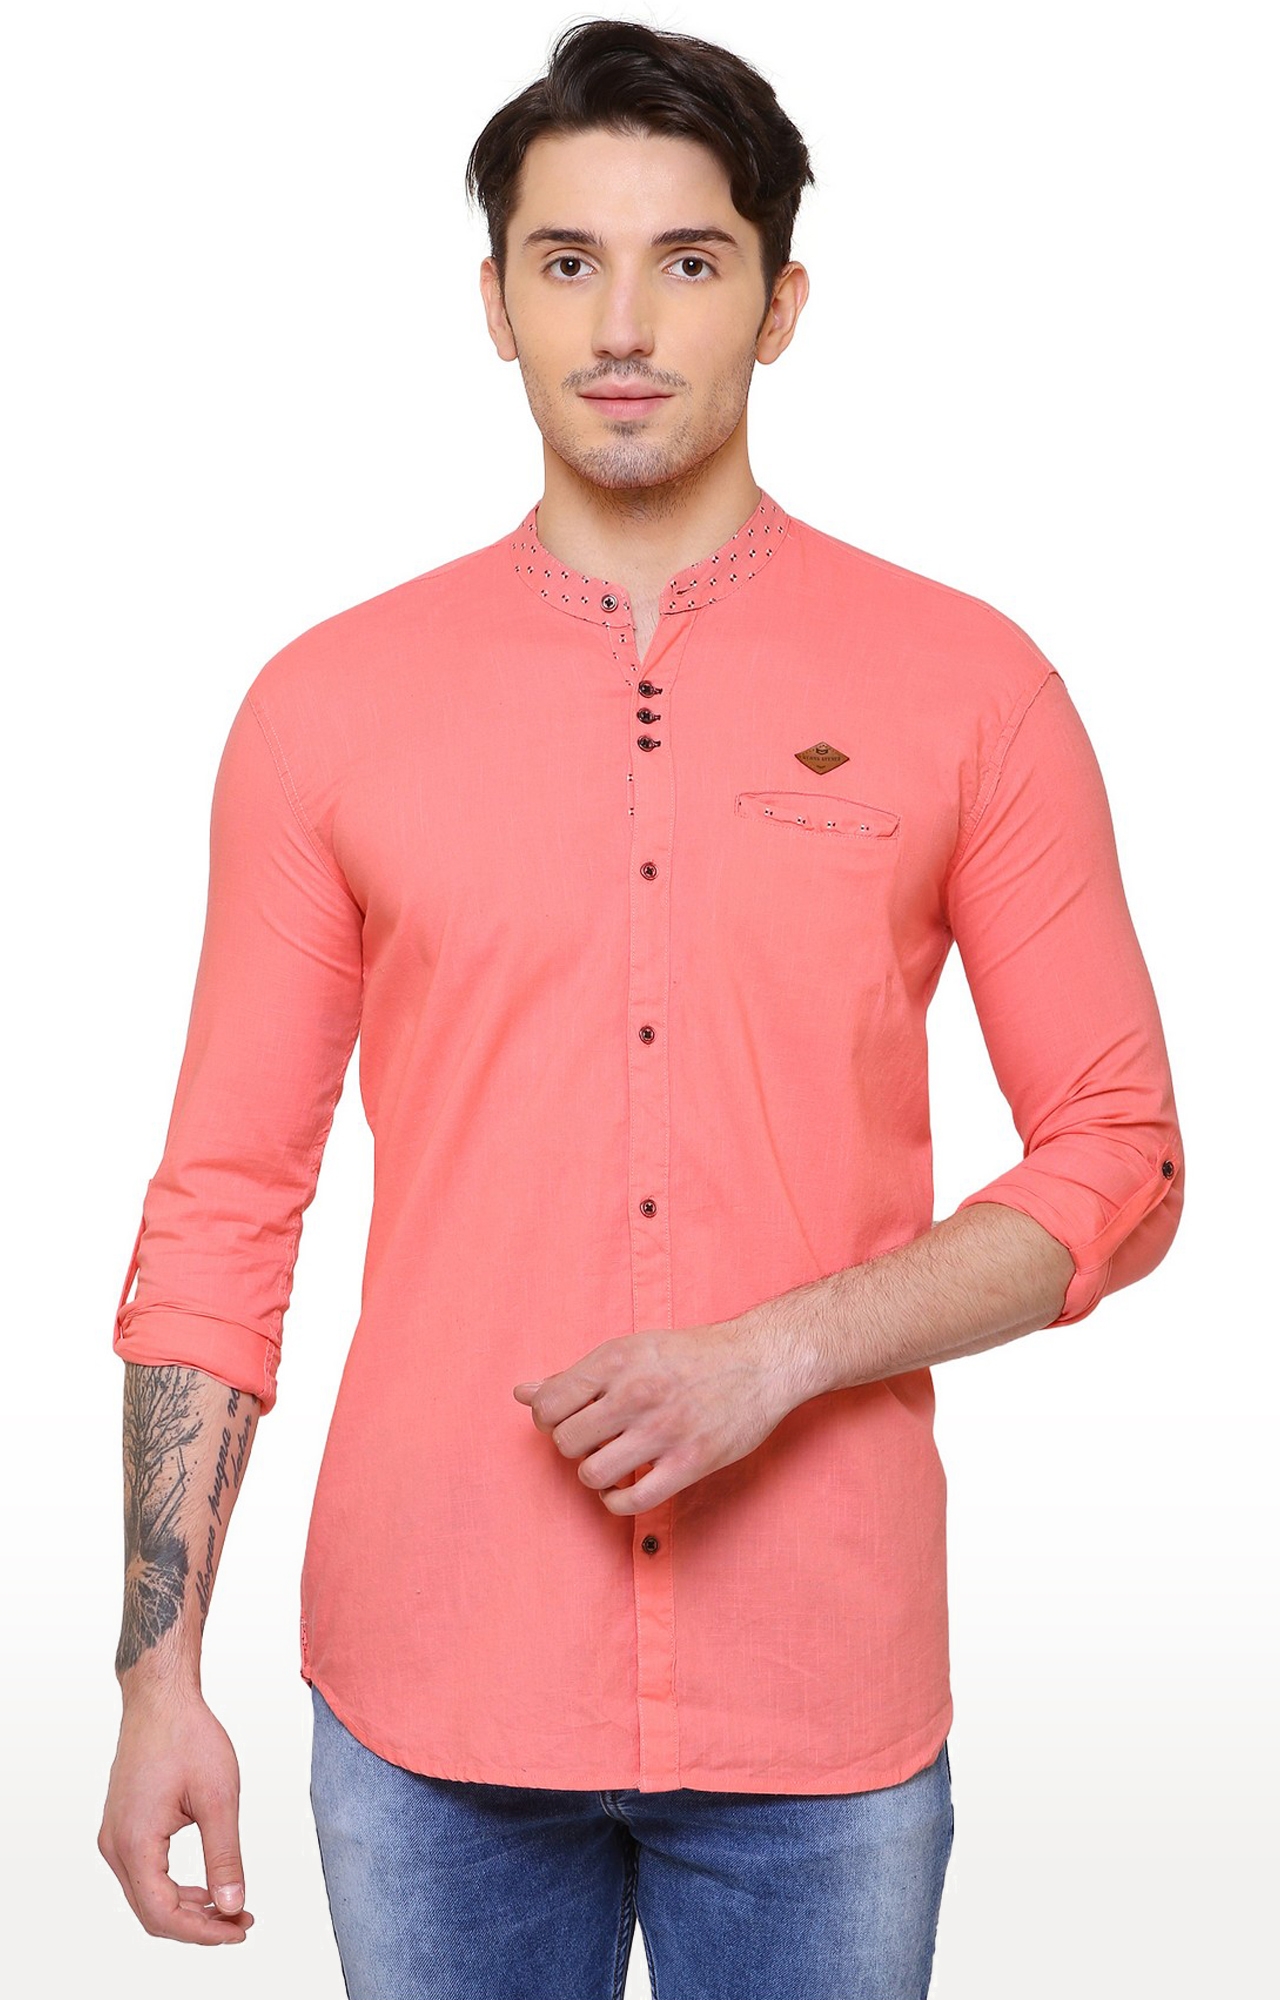 Kuons Avenue Men's Rose Pink Linen Cotton Shirt